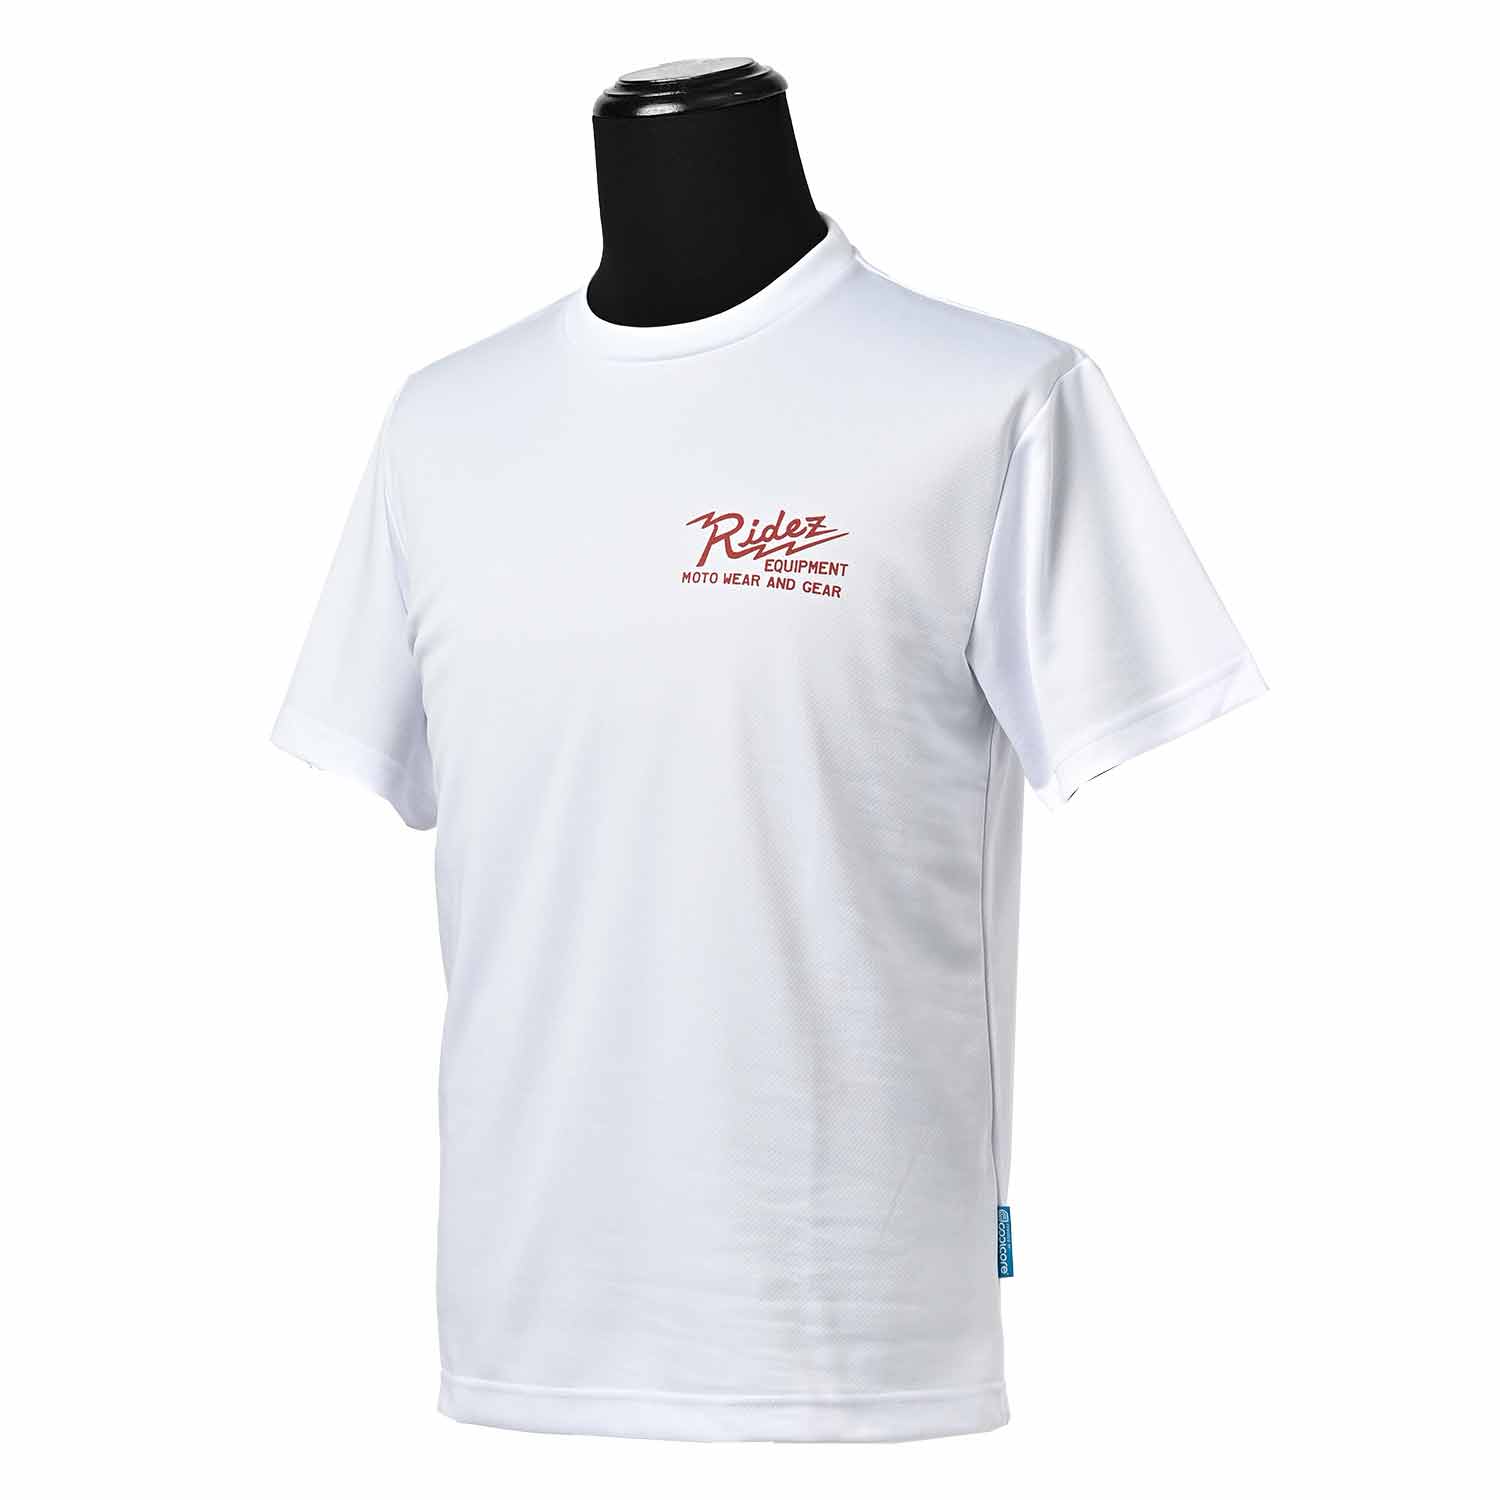 RIDEZ LOGO CoolCore Original T-shirt RD7025 